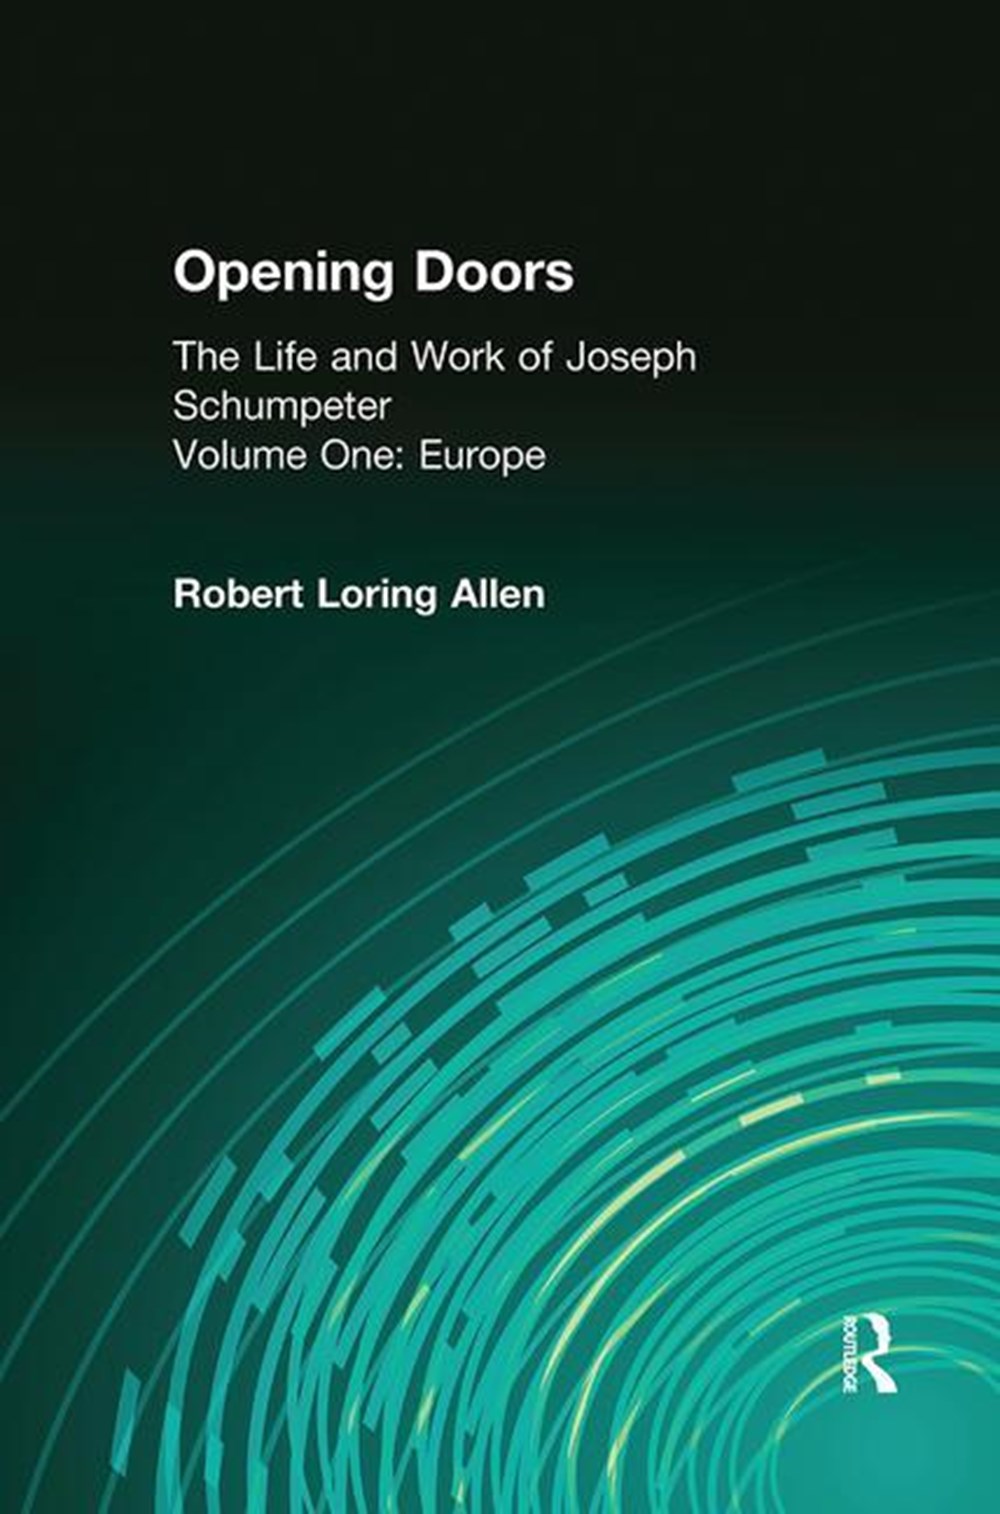 Opening Doors Life and Work of Joseph Schumpeter: Volume 1, Europe